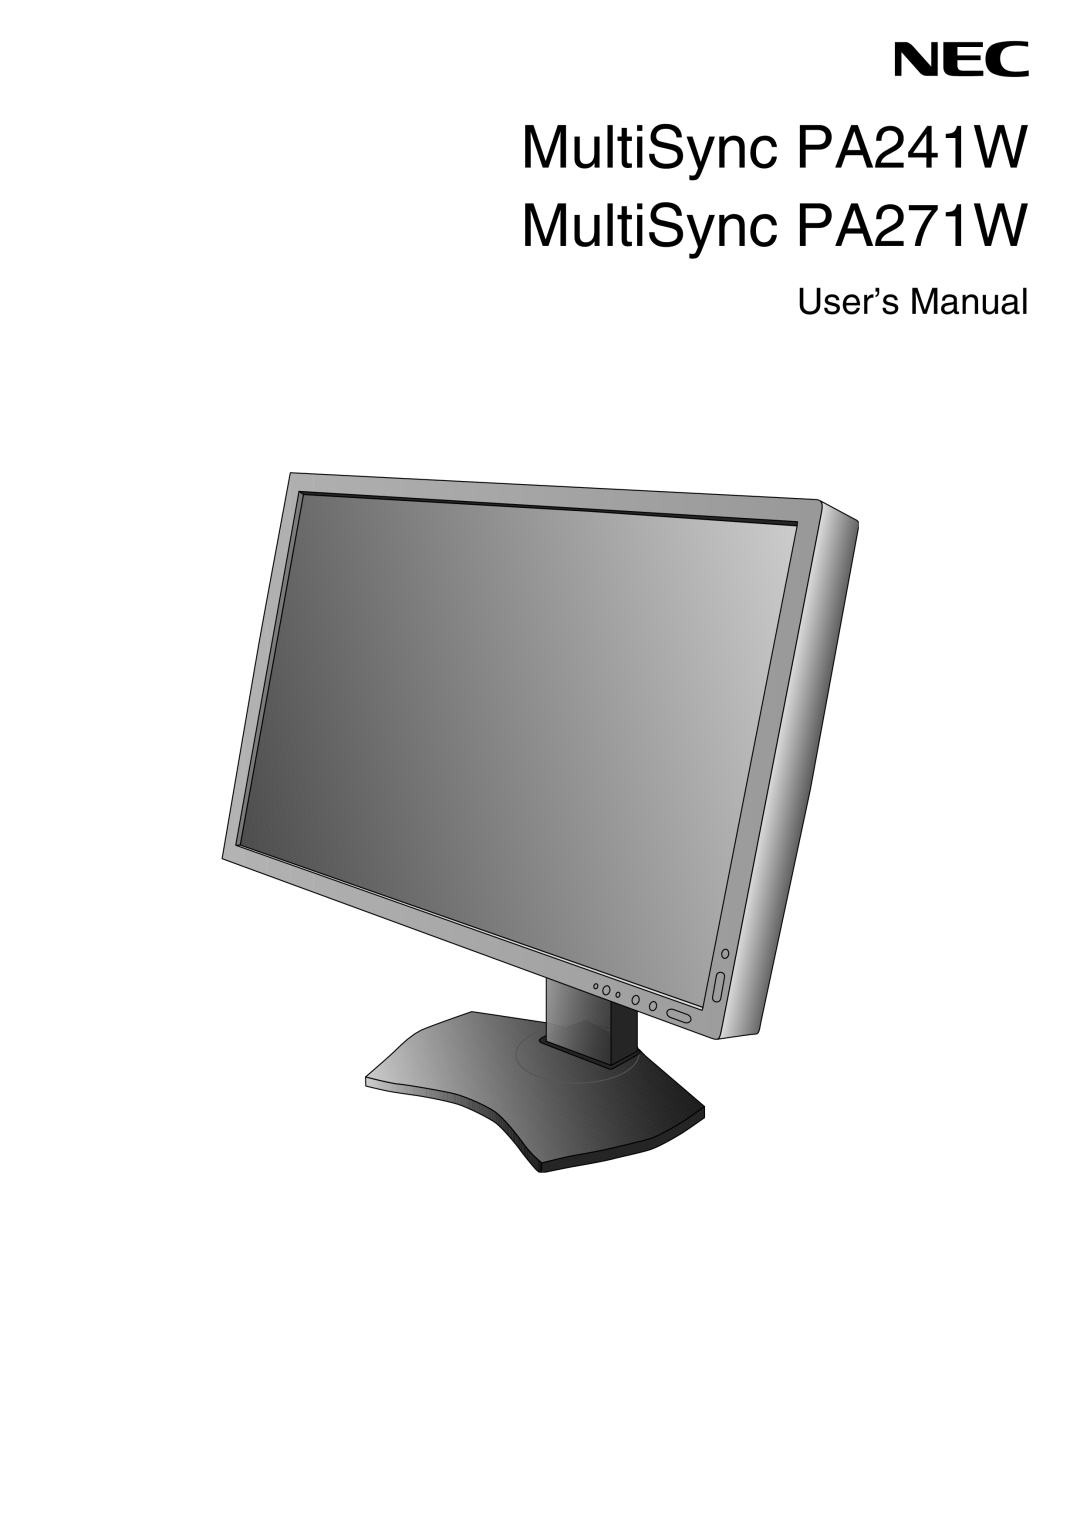 NEC user manual MultiSync PA241W MultiSync PA271W, User’s Manual 